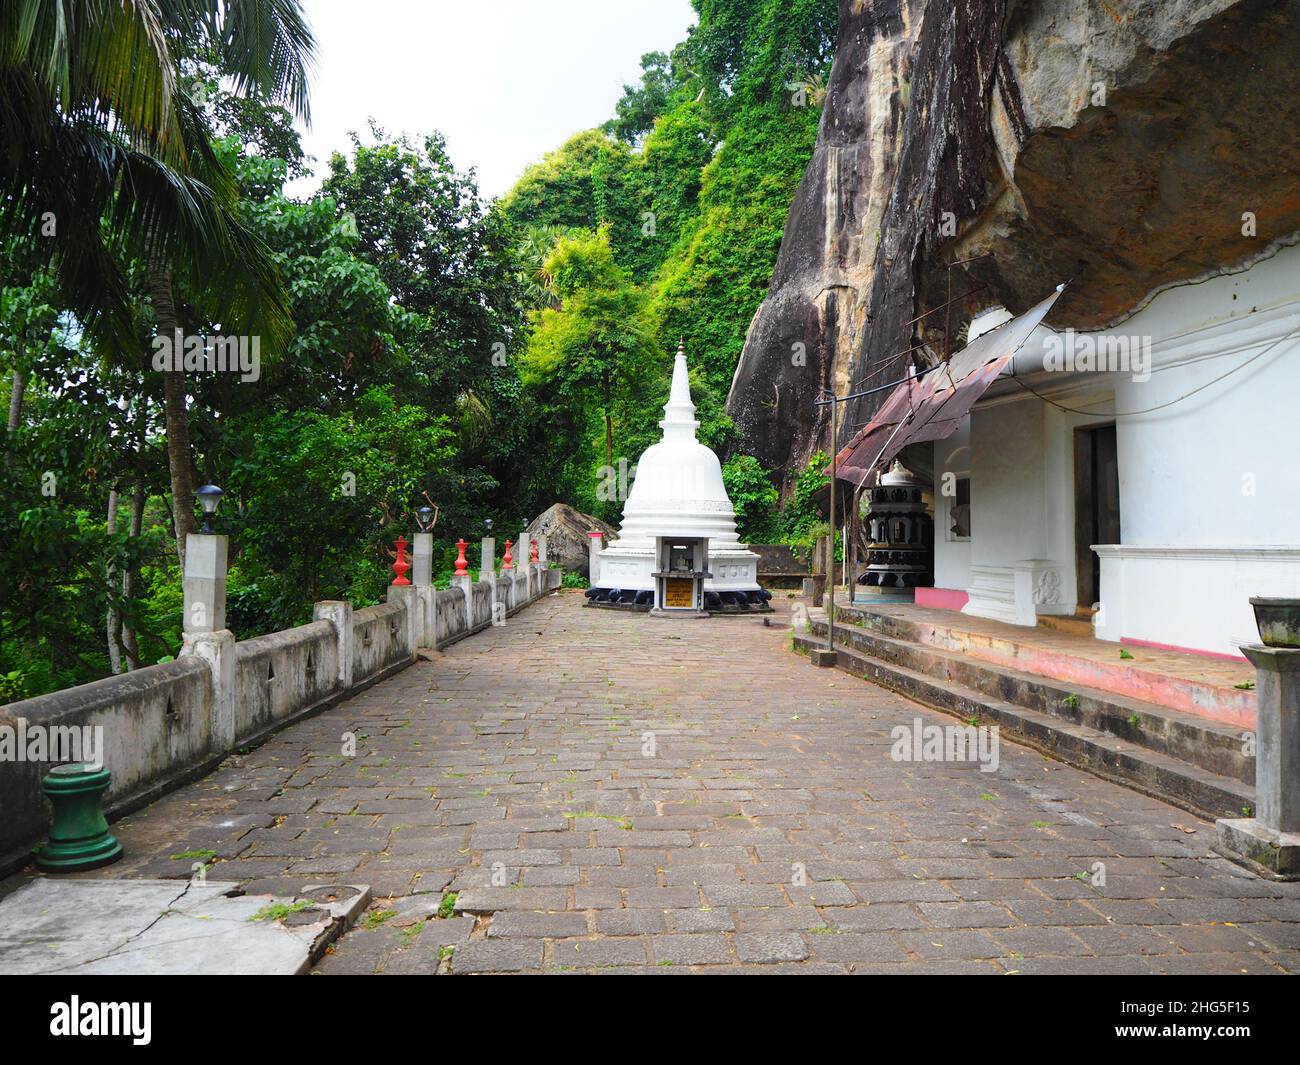 Viaje Asia, Templo Sudeste de Asia #SriLanka #Asia #aroundthworld #SouthEastAsia #wanderlust #hinterland #authentic #fernweh #slowtravel #loweasia Foto de stock